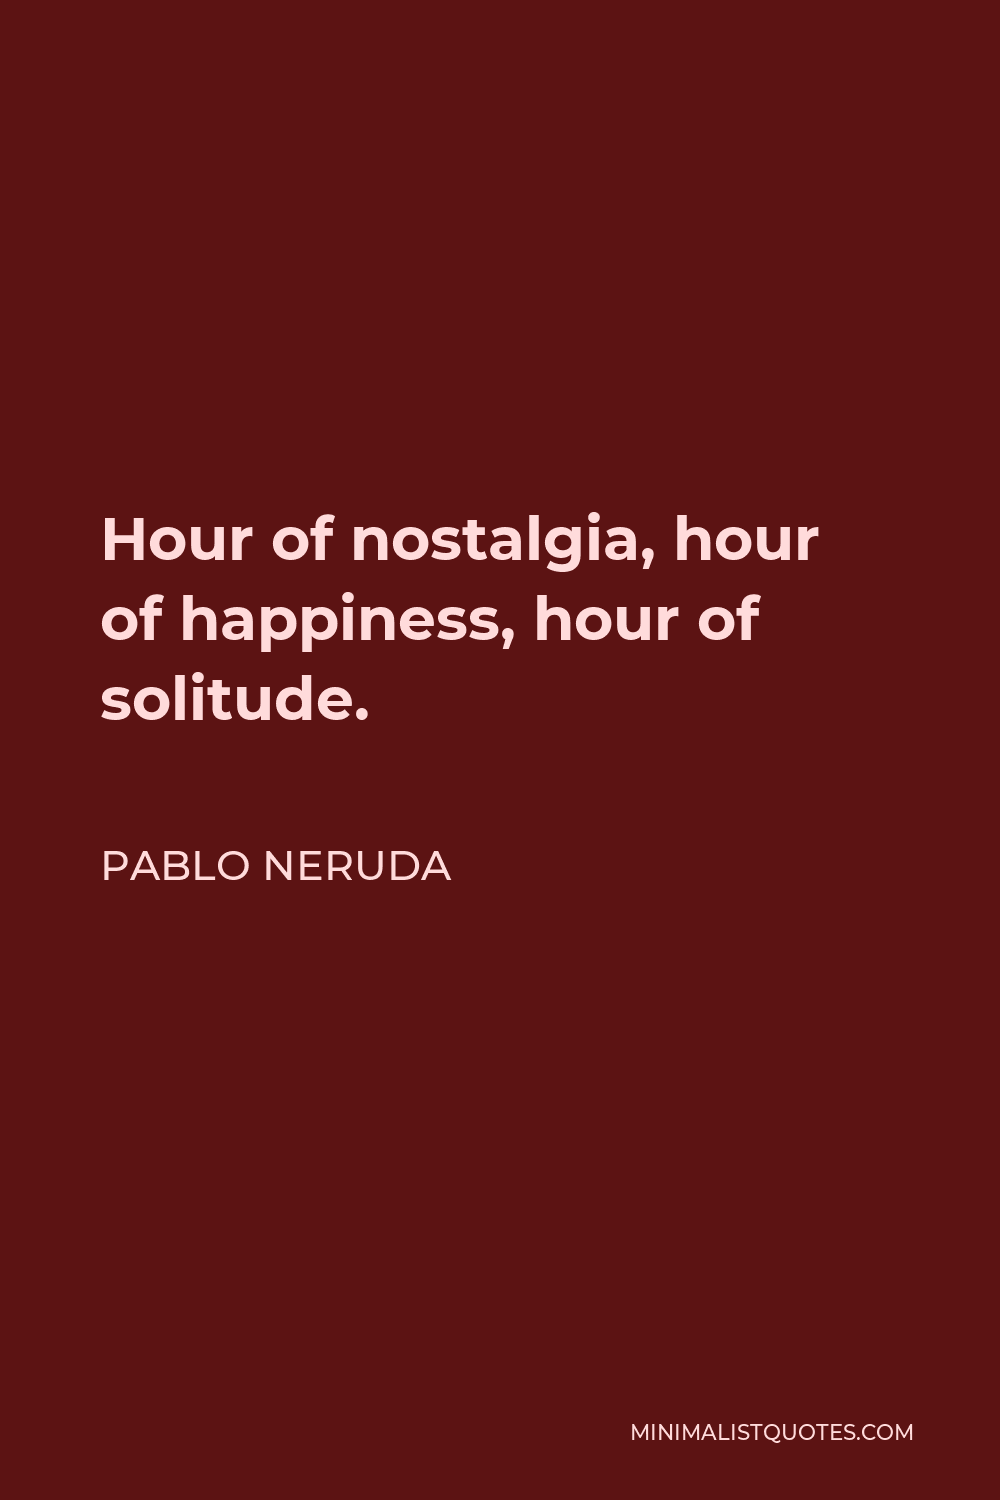 Pablo Neruda Quote - Hour of nostalgia, hour of happiness, hour of solitude.